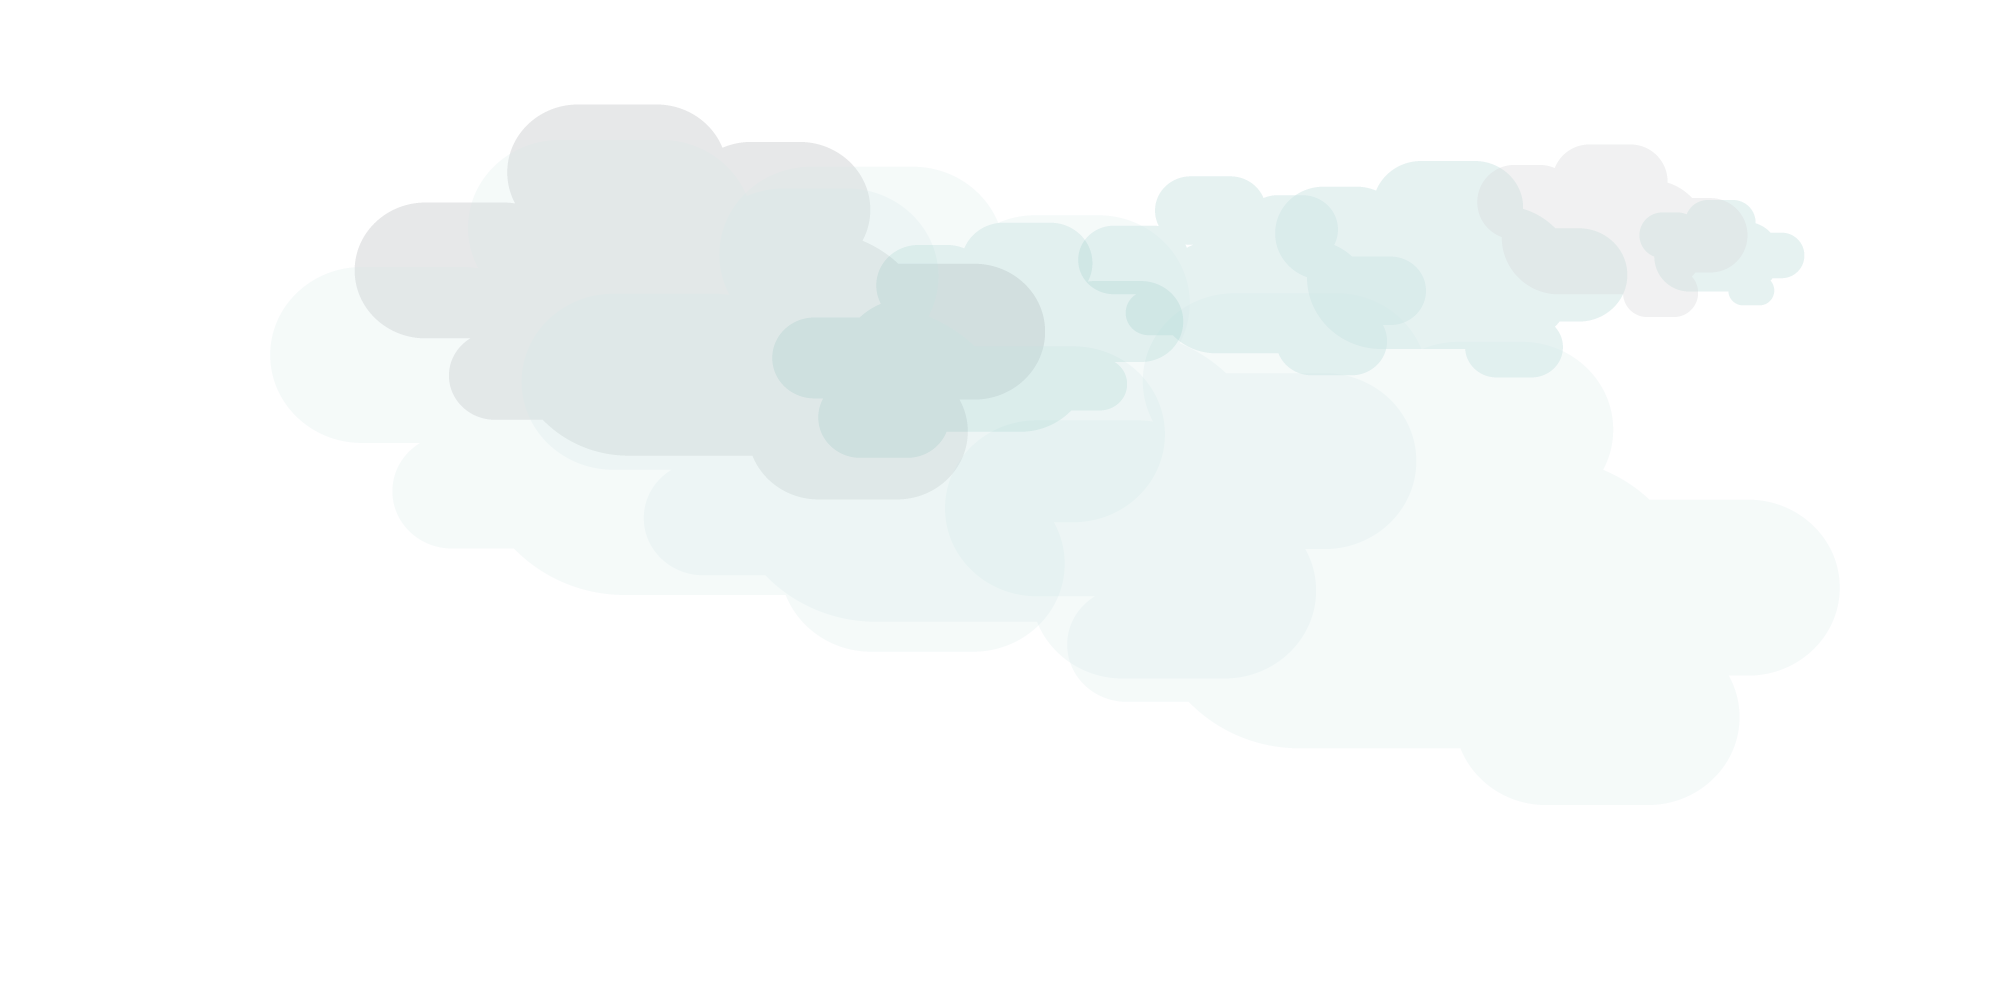 Drain diagram - clouds